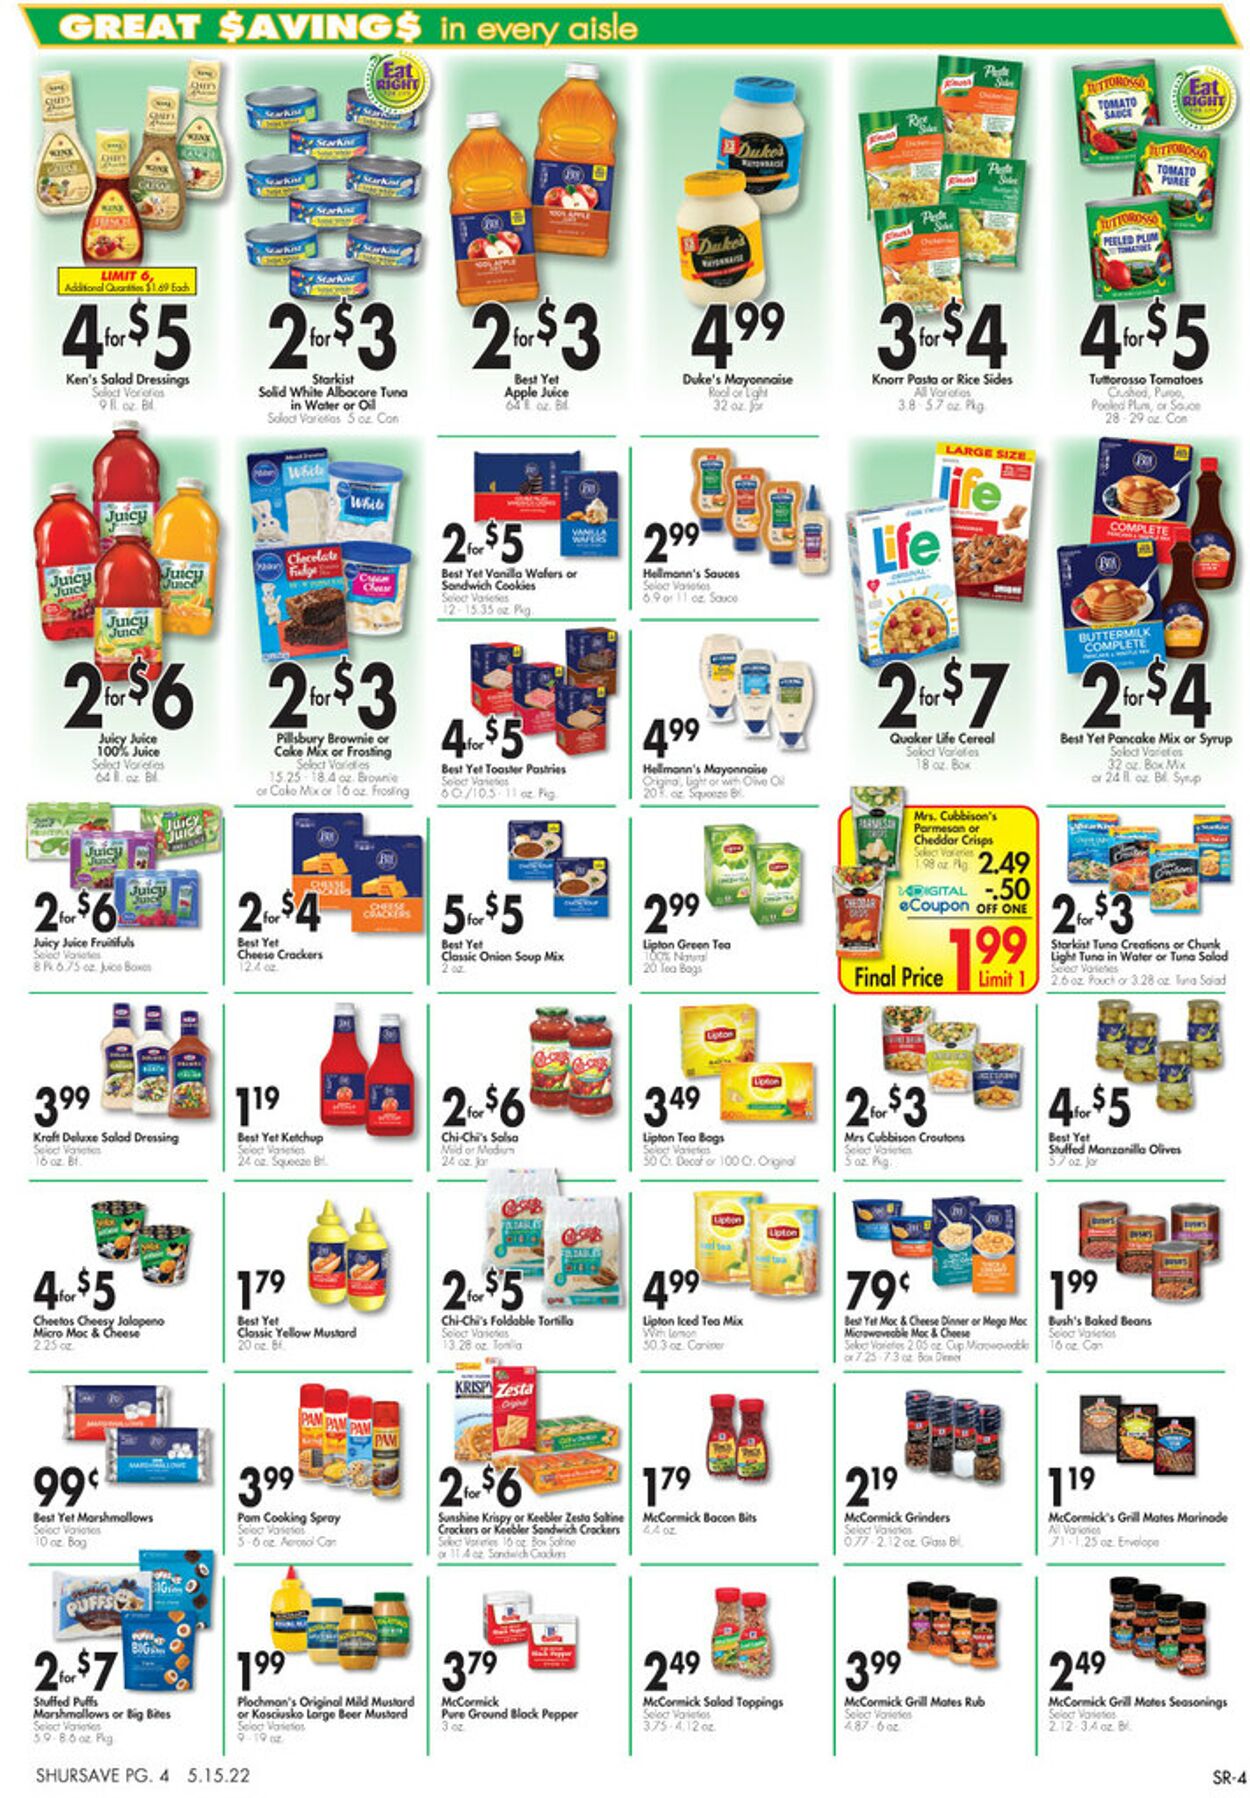 Weekly ad Gerrity's Supermarkets 05/15/2022 - 05/21/2022